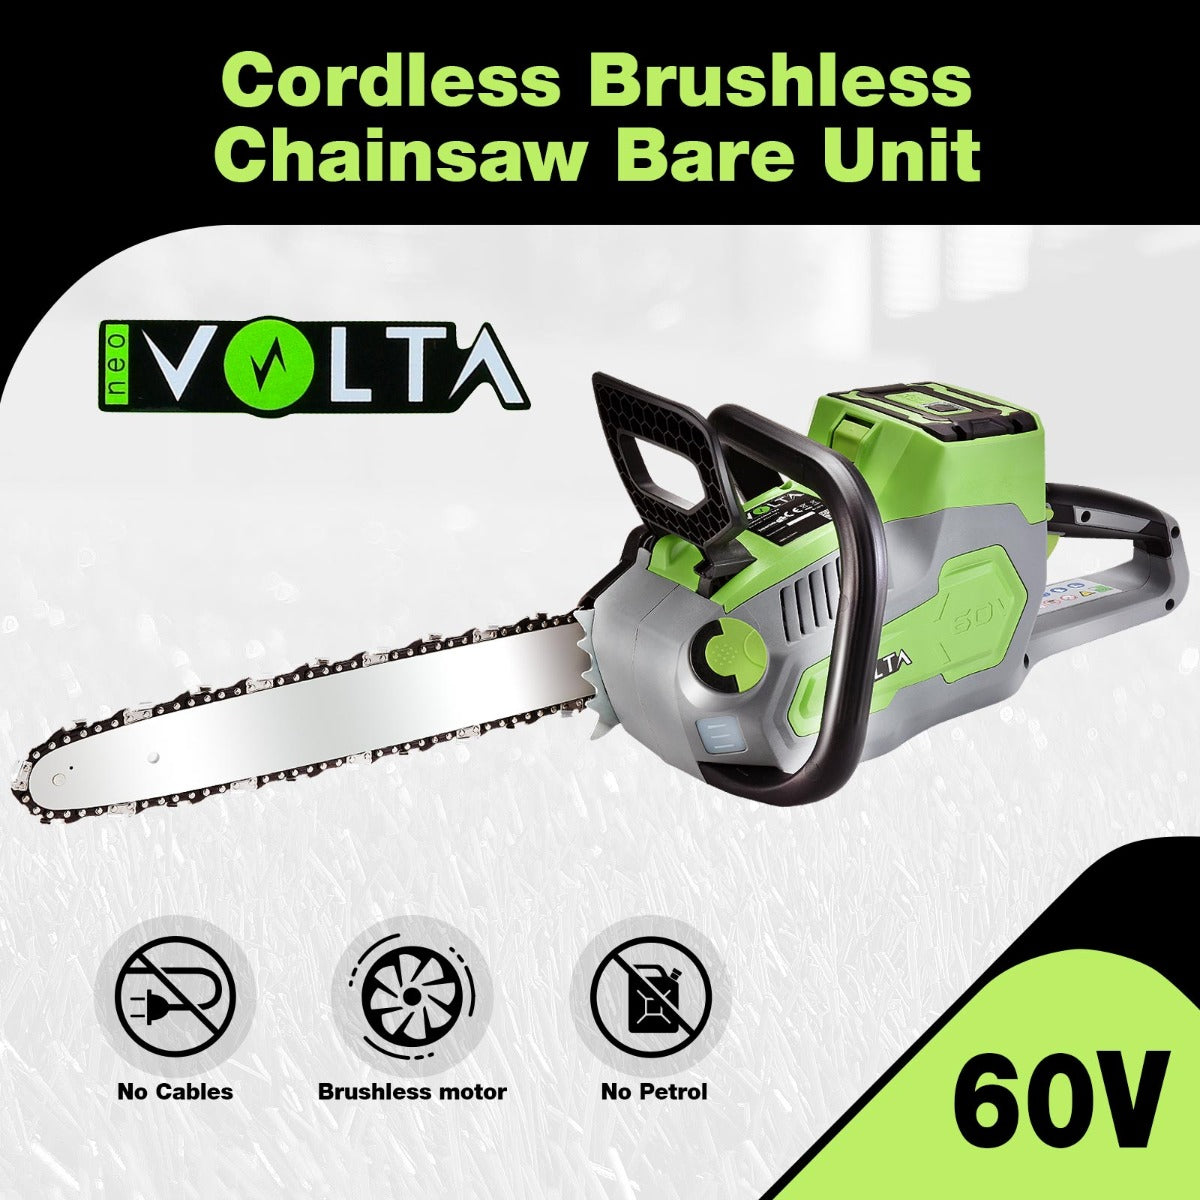 Neovolta 60V Brushless Cordless Chainsaw Tool Only